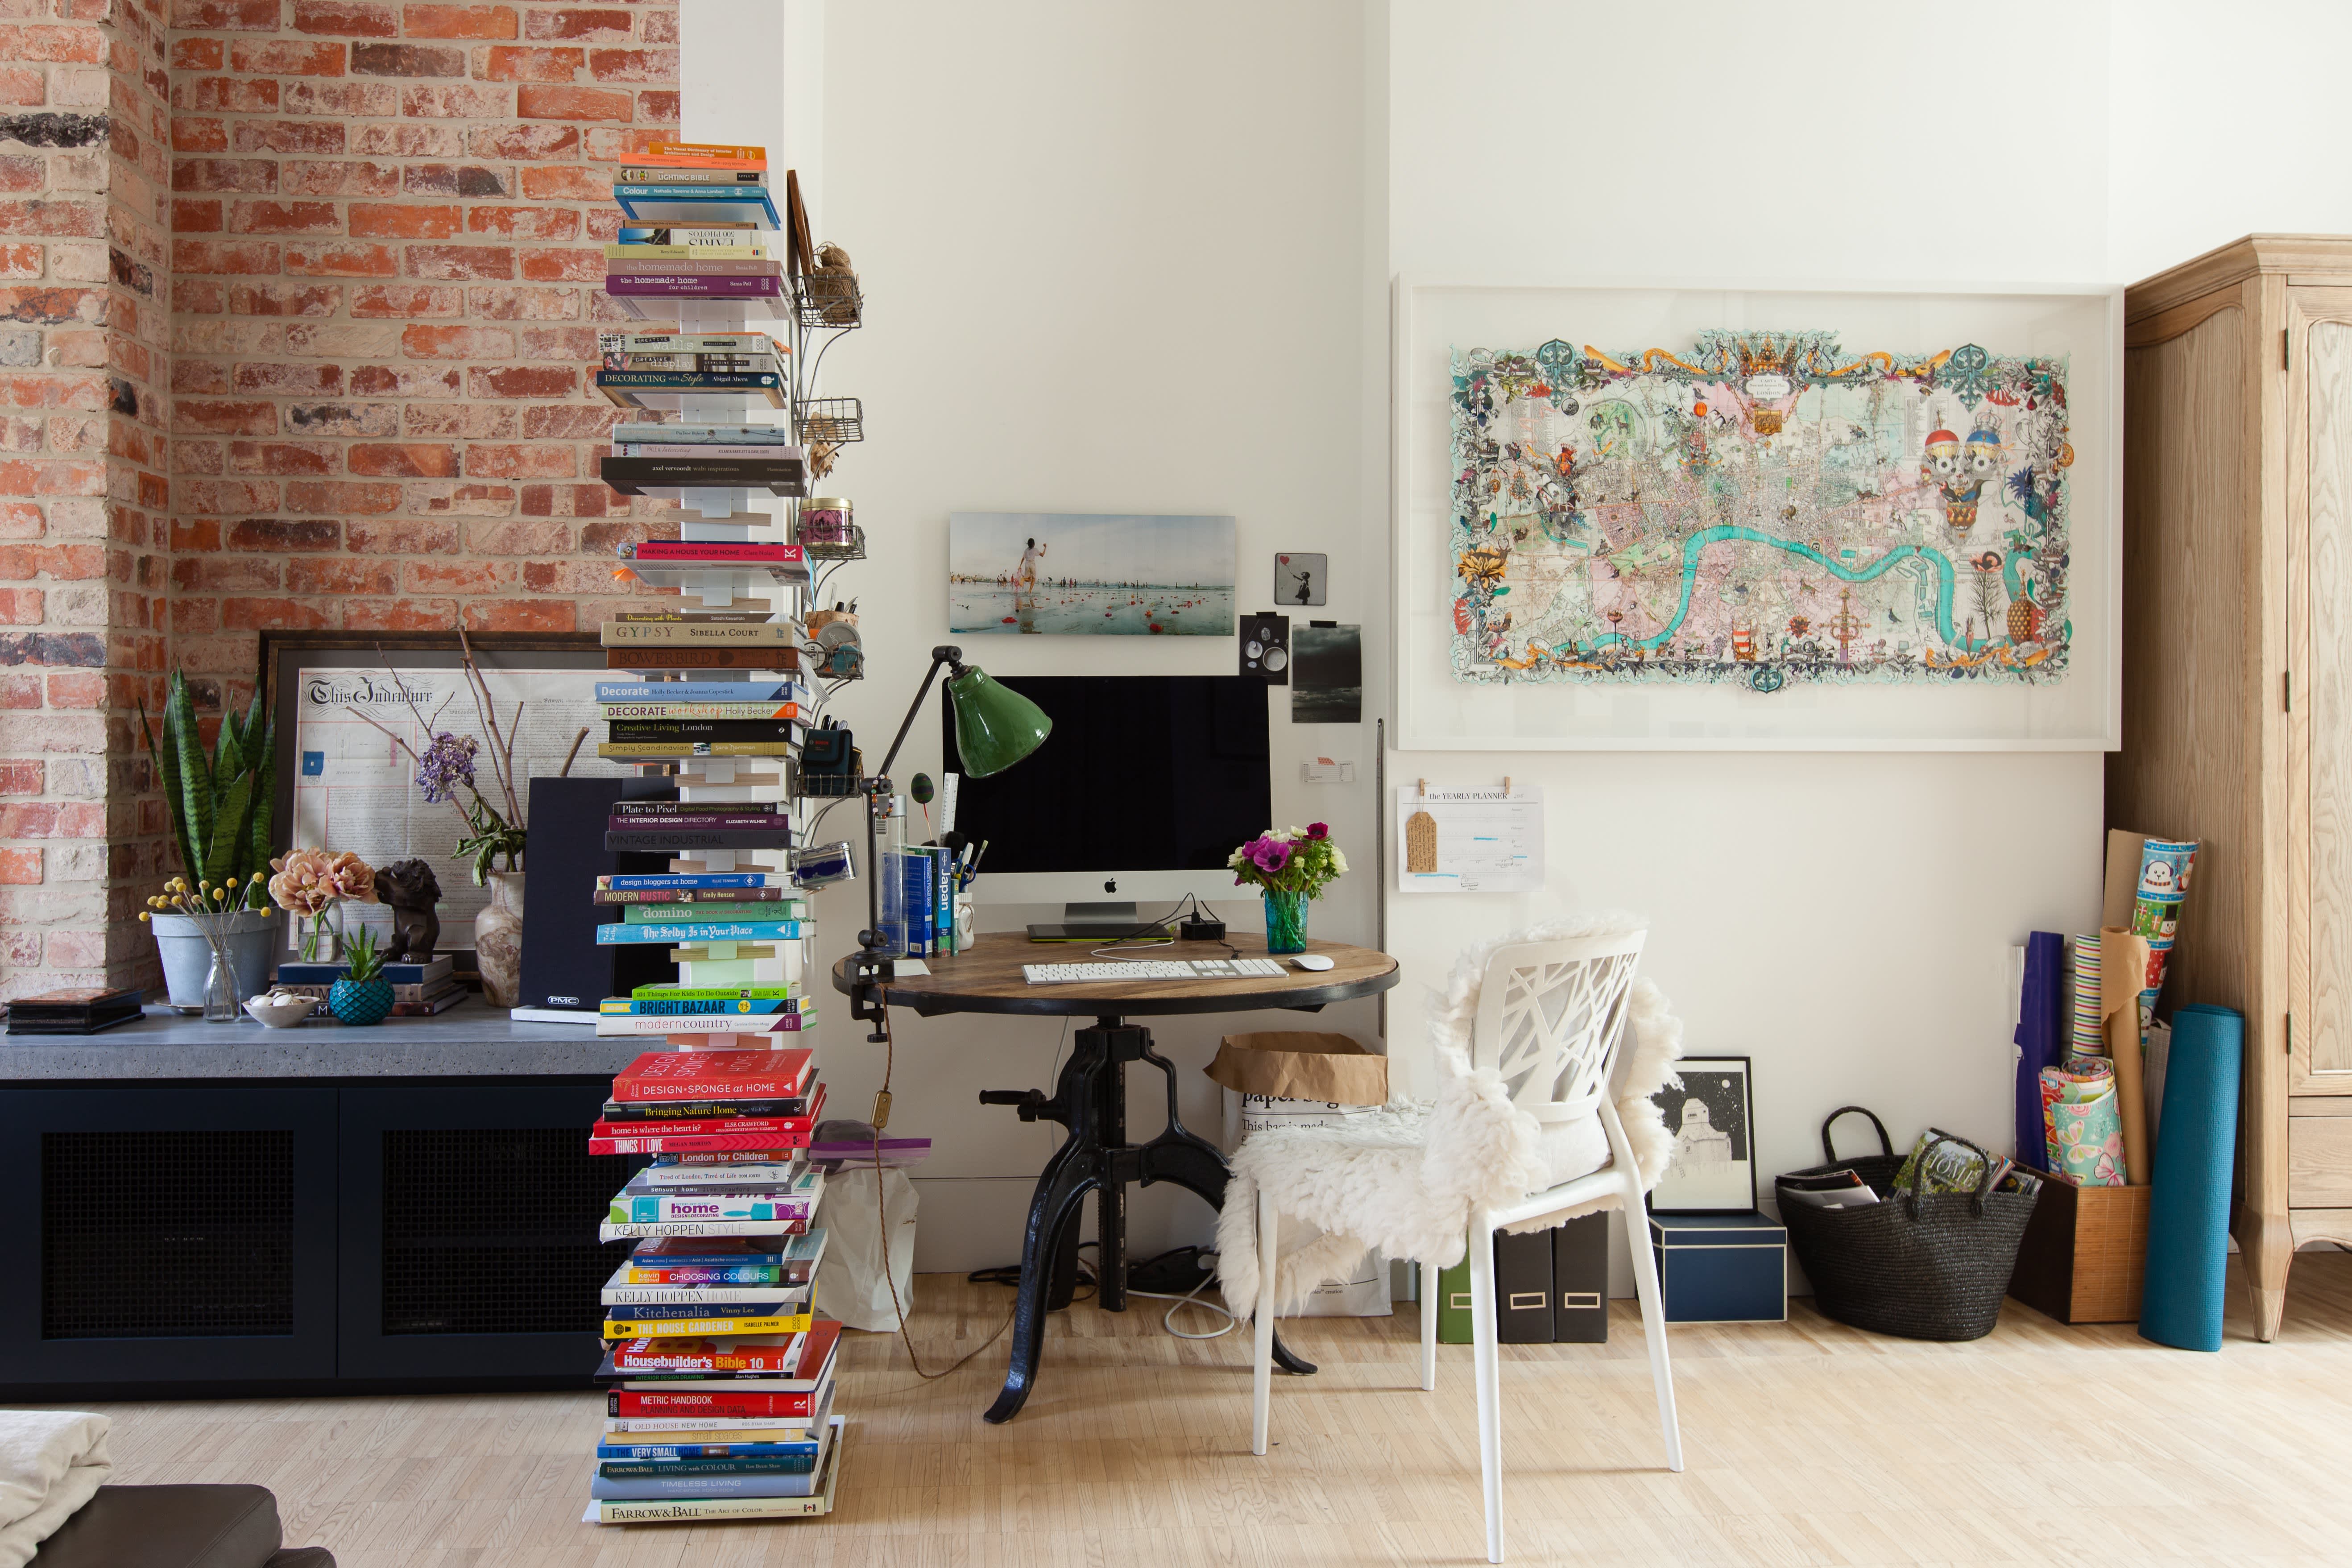 Modern home office: How to create a workspace you love - Coa